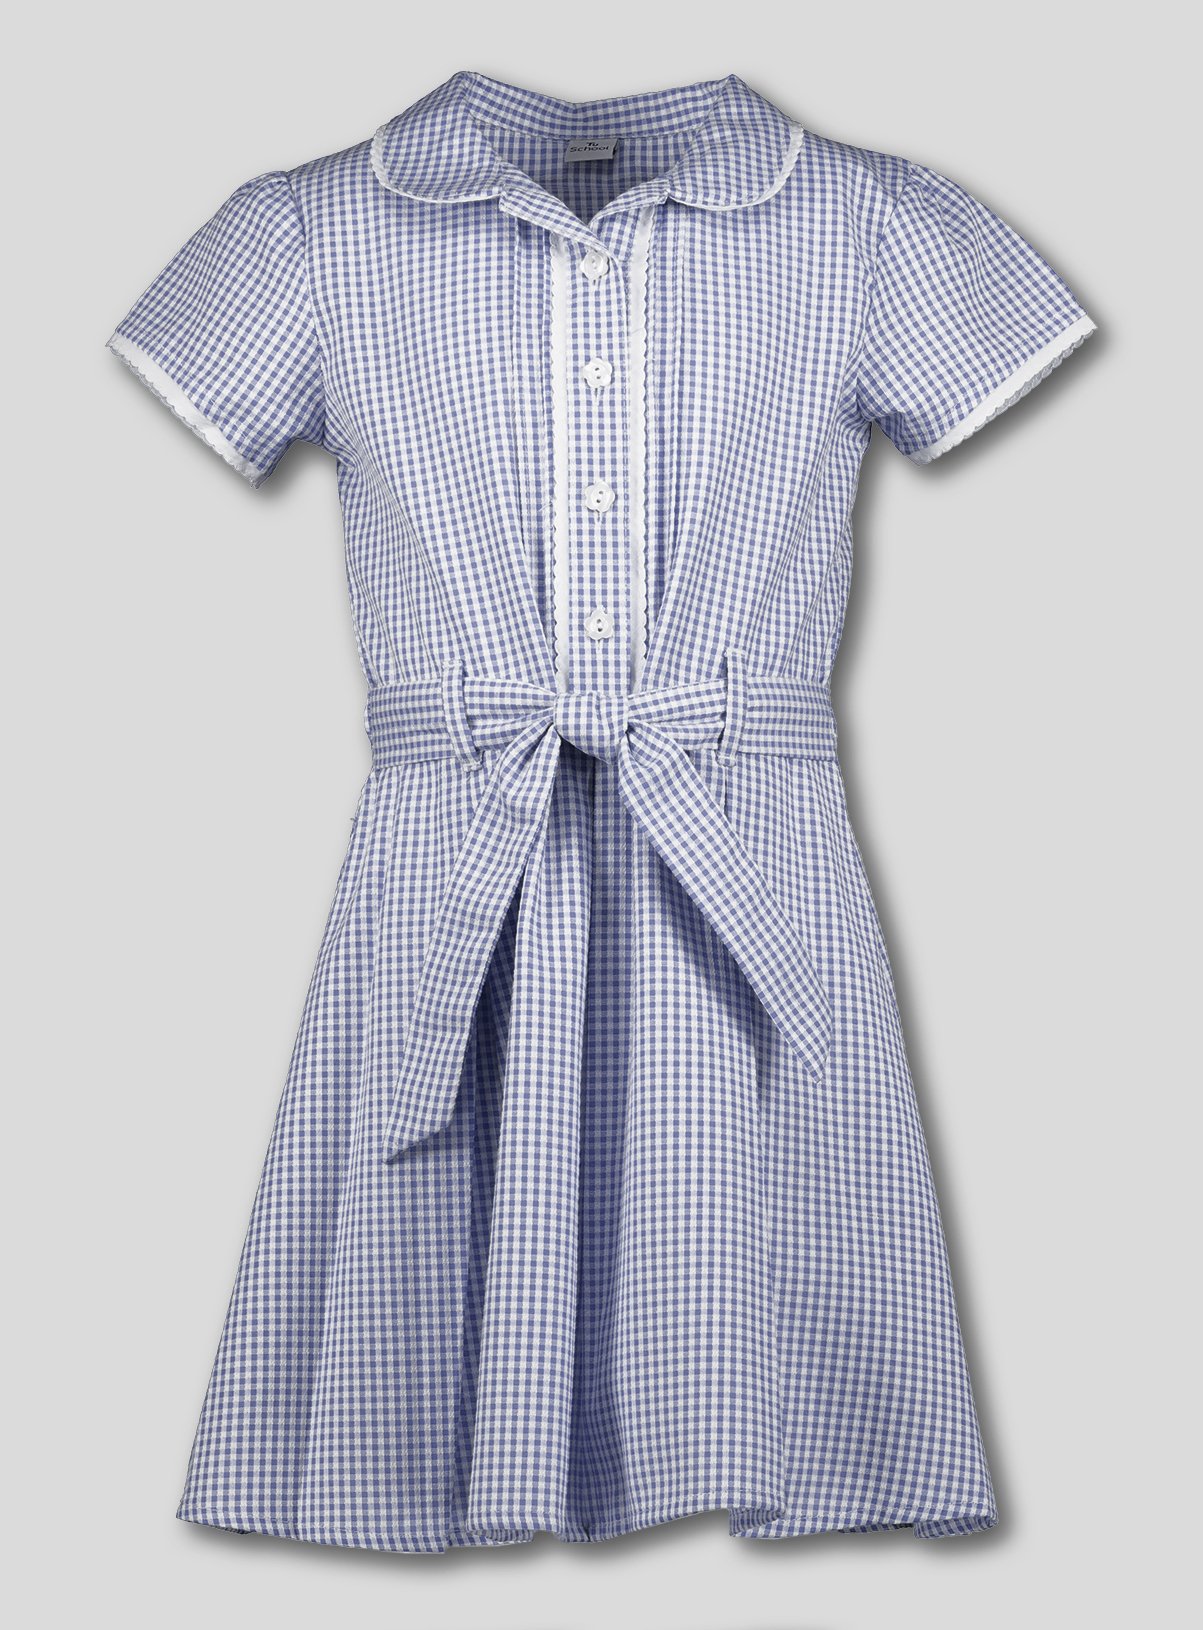 Navy Blue Gingham Classic School Dress ...